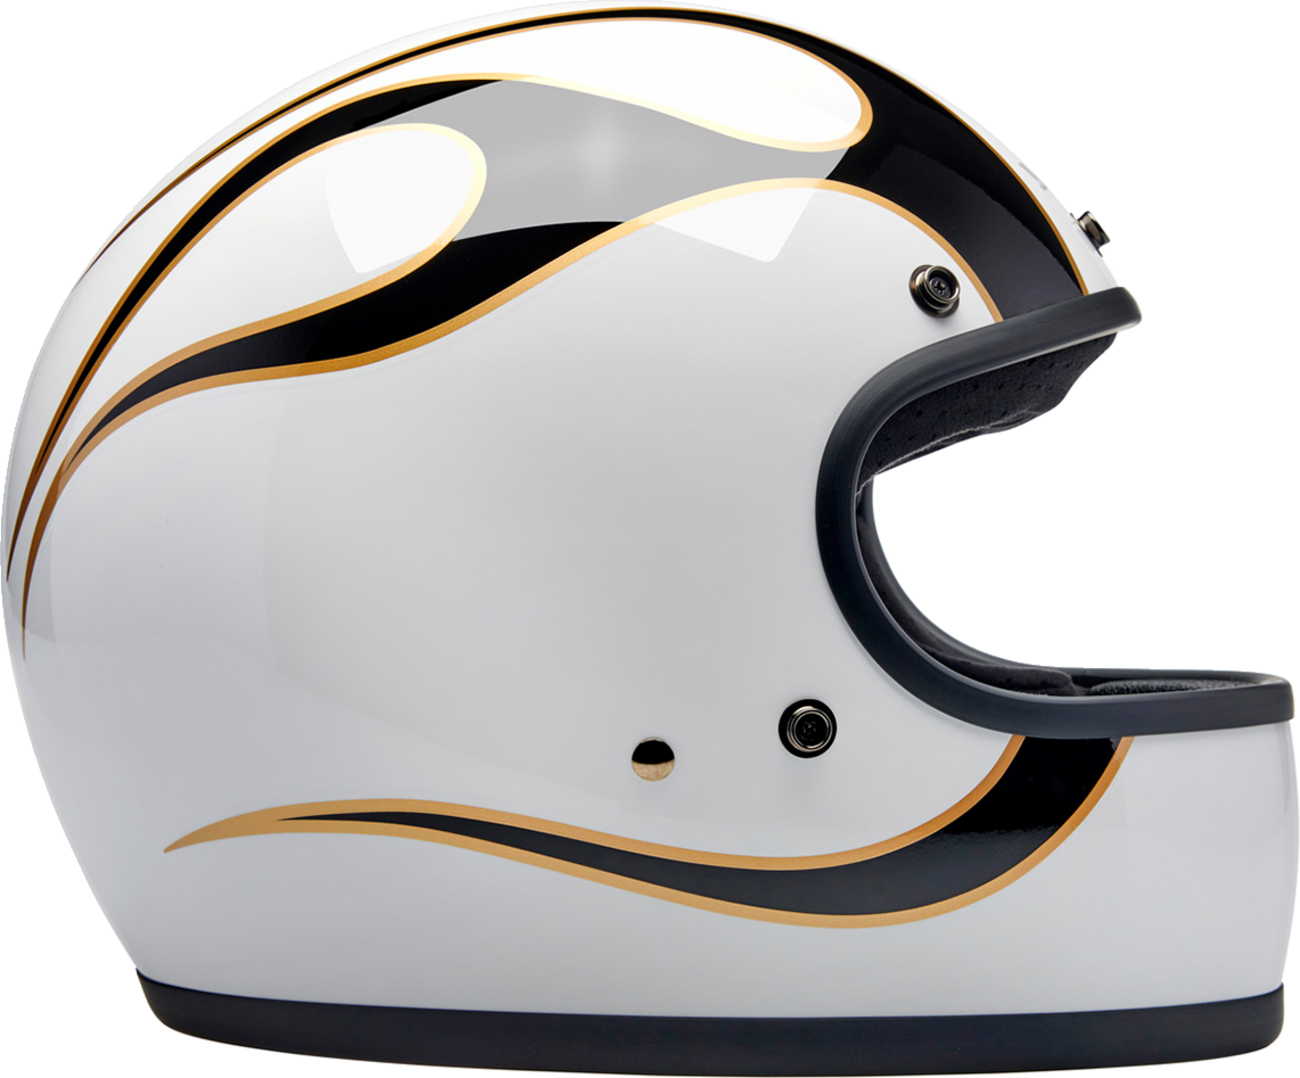 BILTWELL Gringo Helmet - Flames - White/Black - Large 1002-561-504